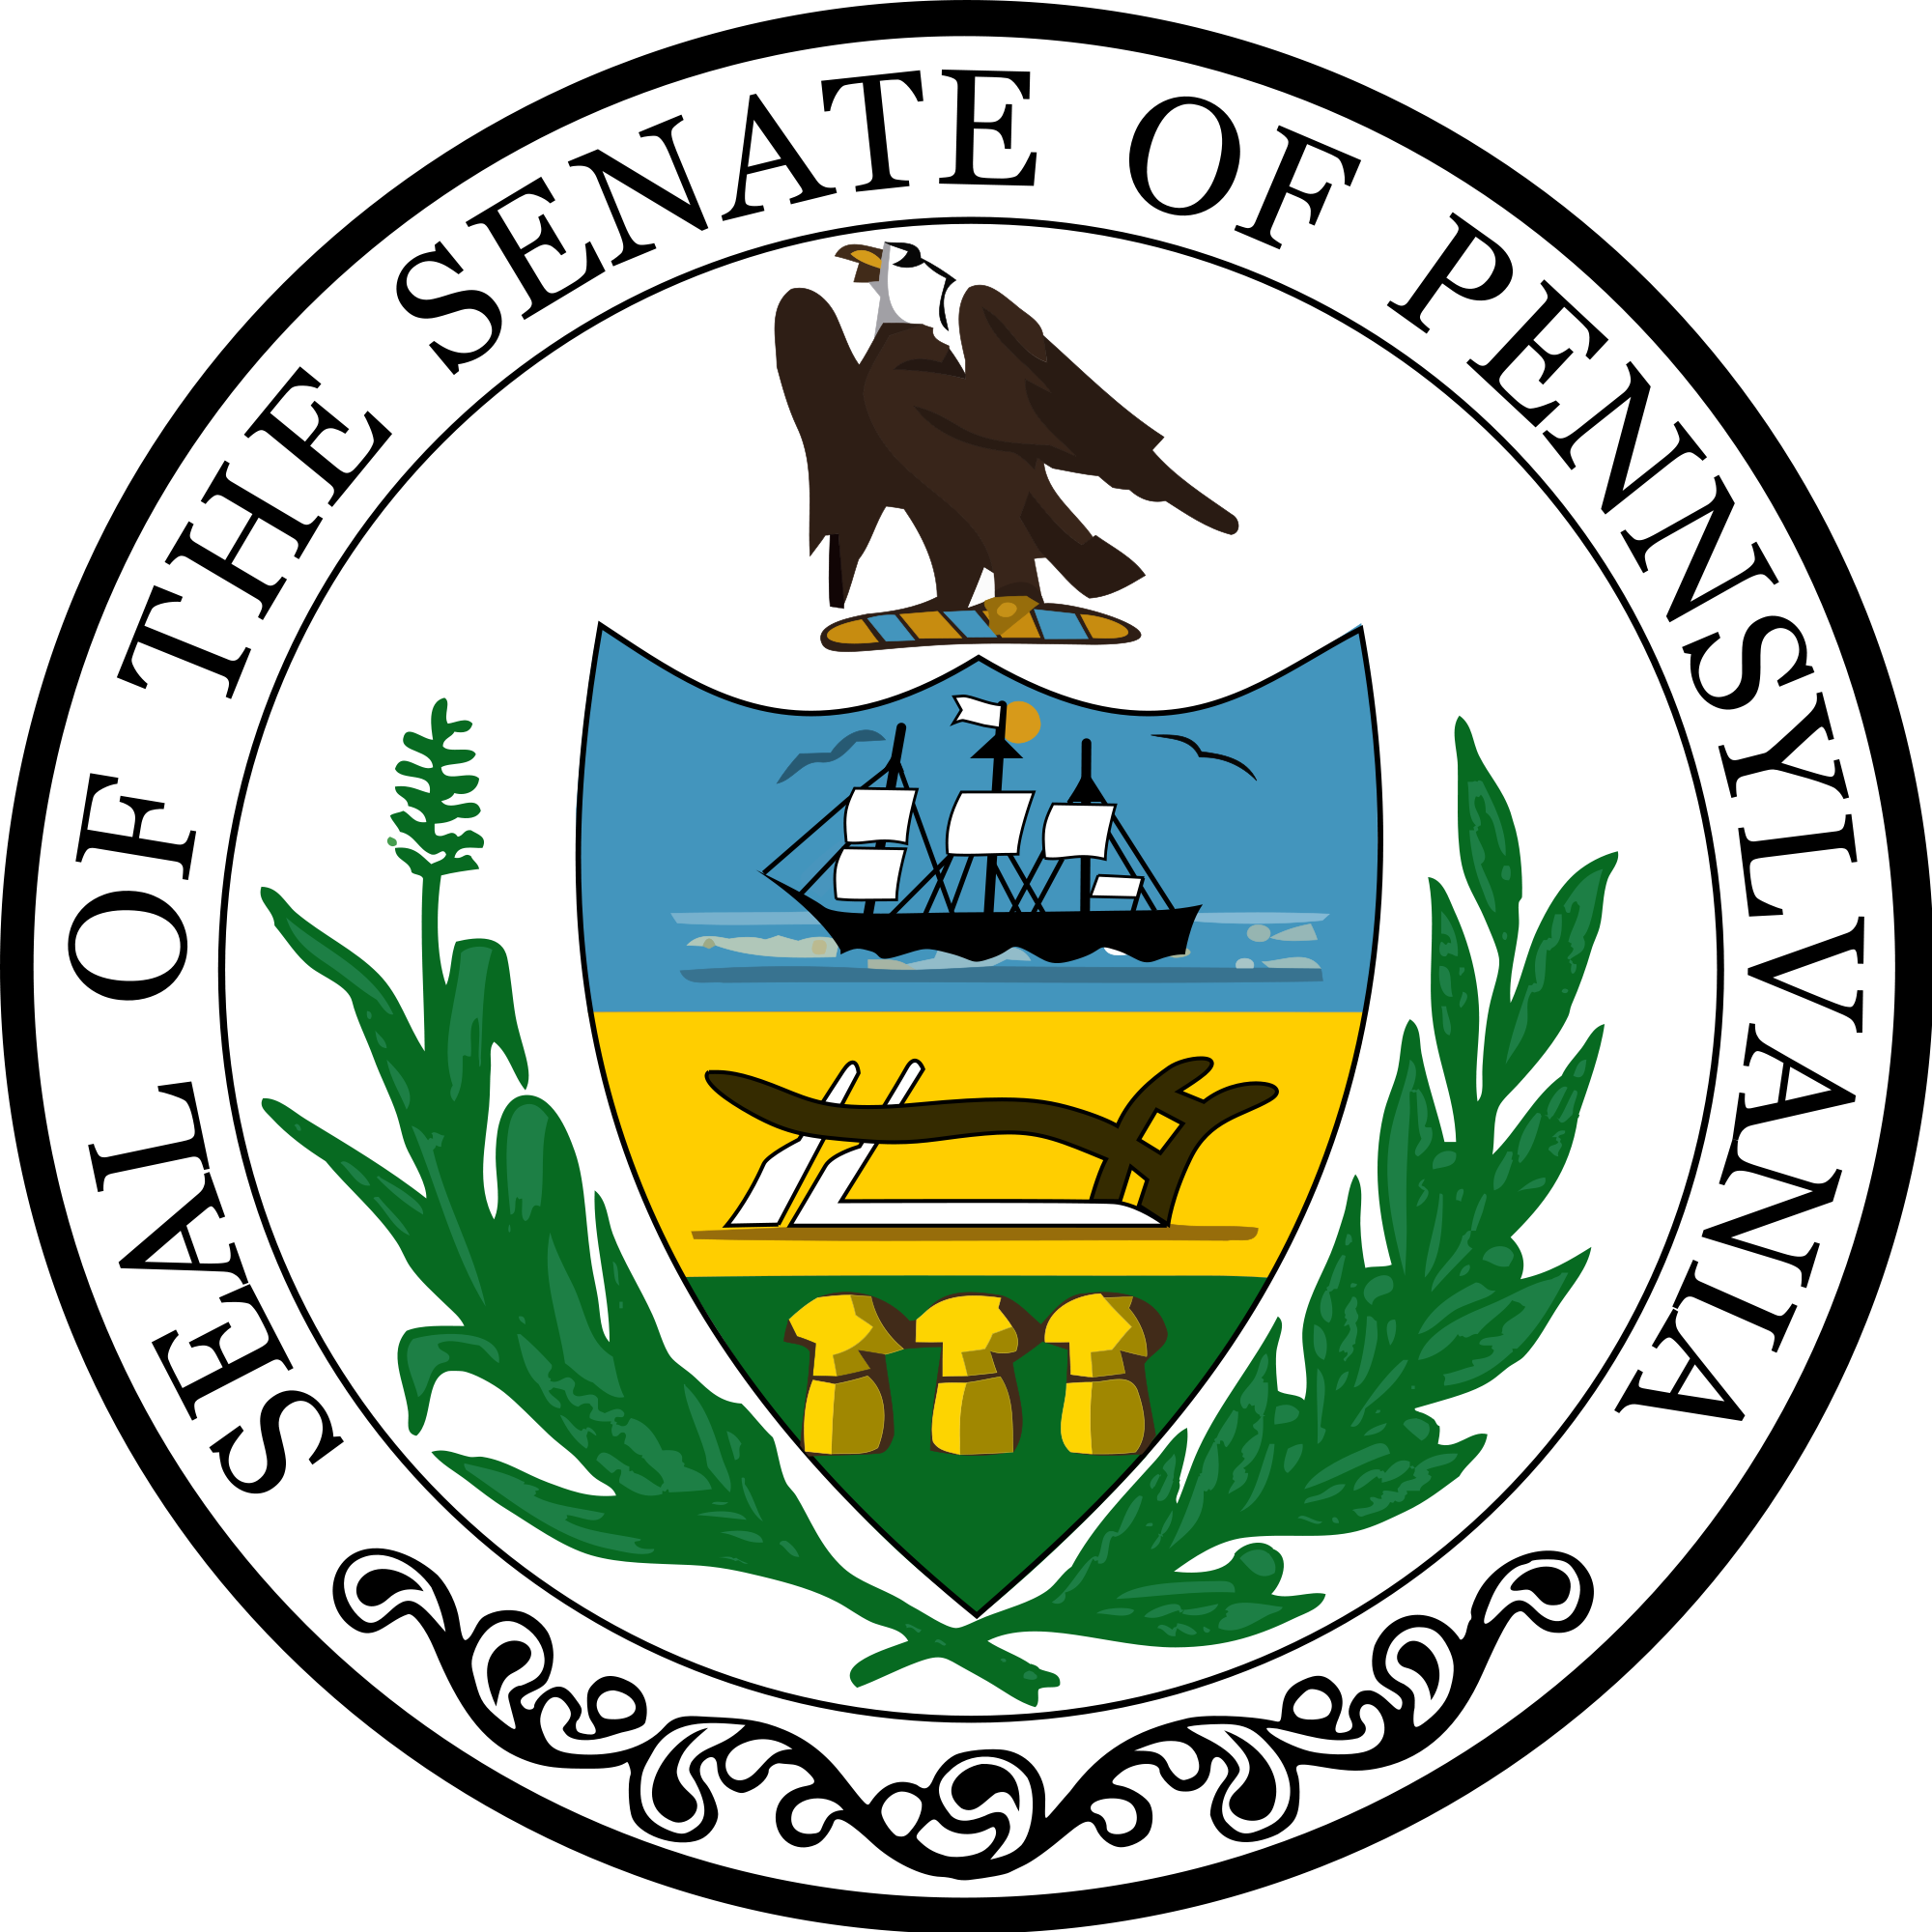 2000px-Seal_of_the_Senate_of_Pennsylvania.png